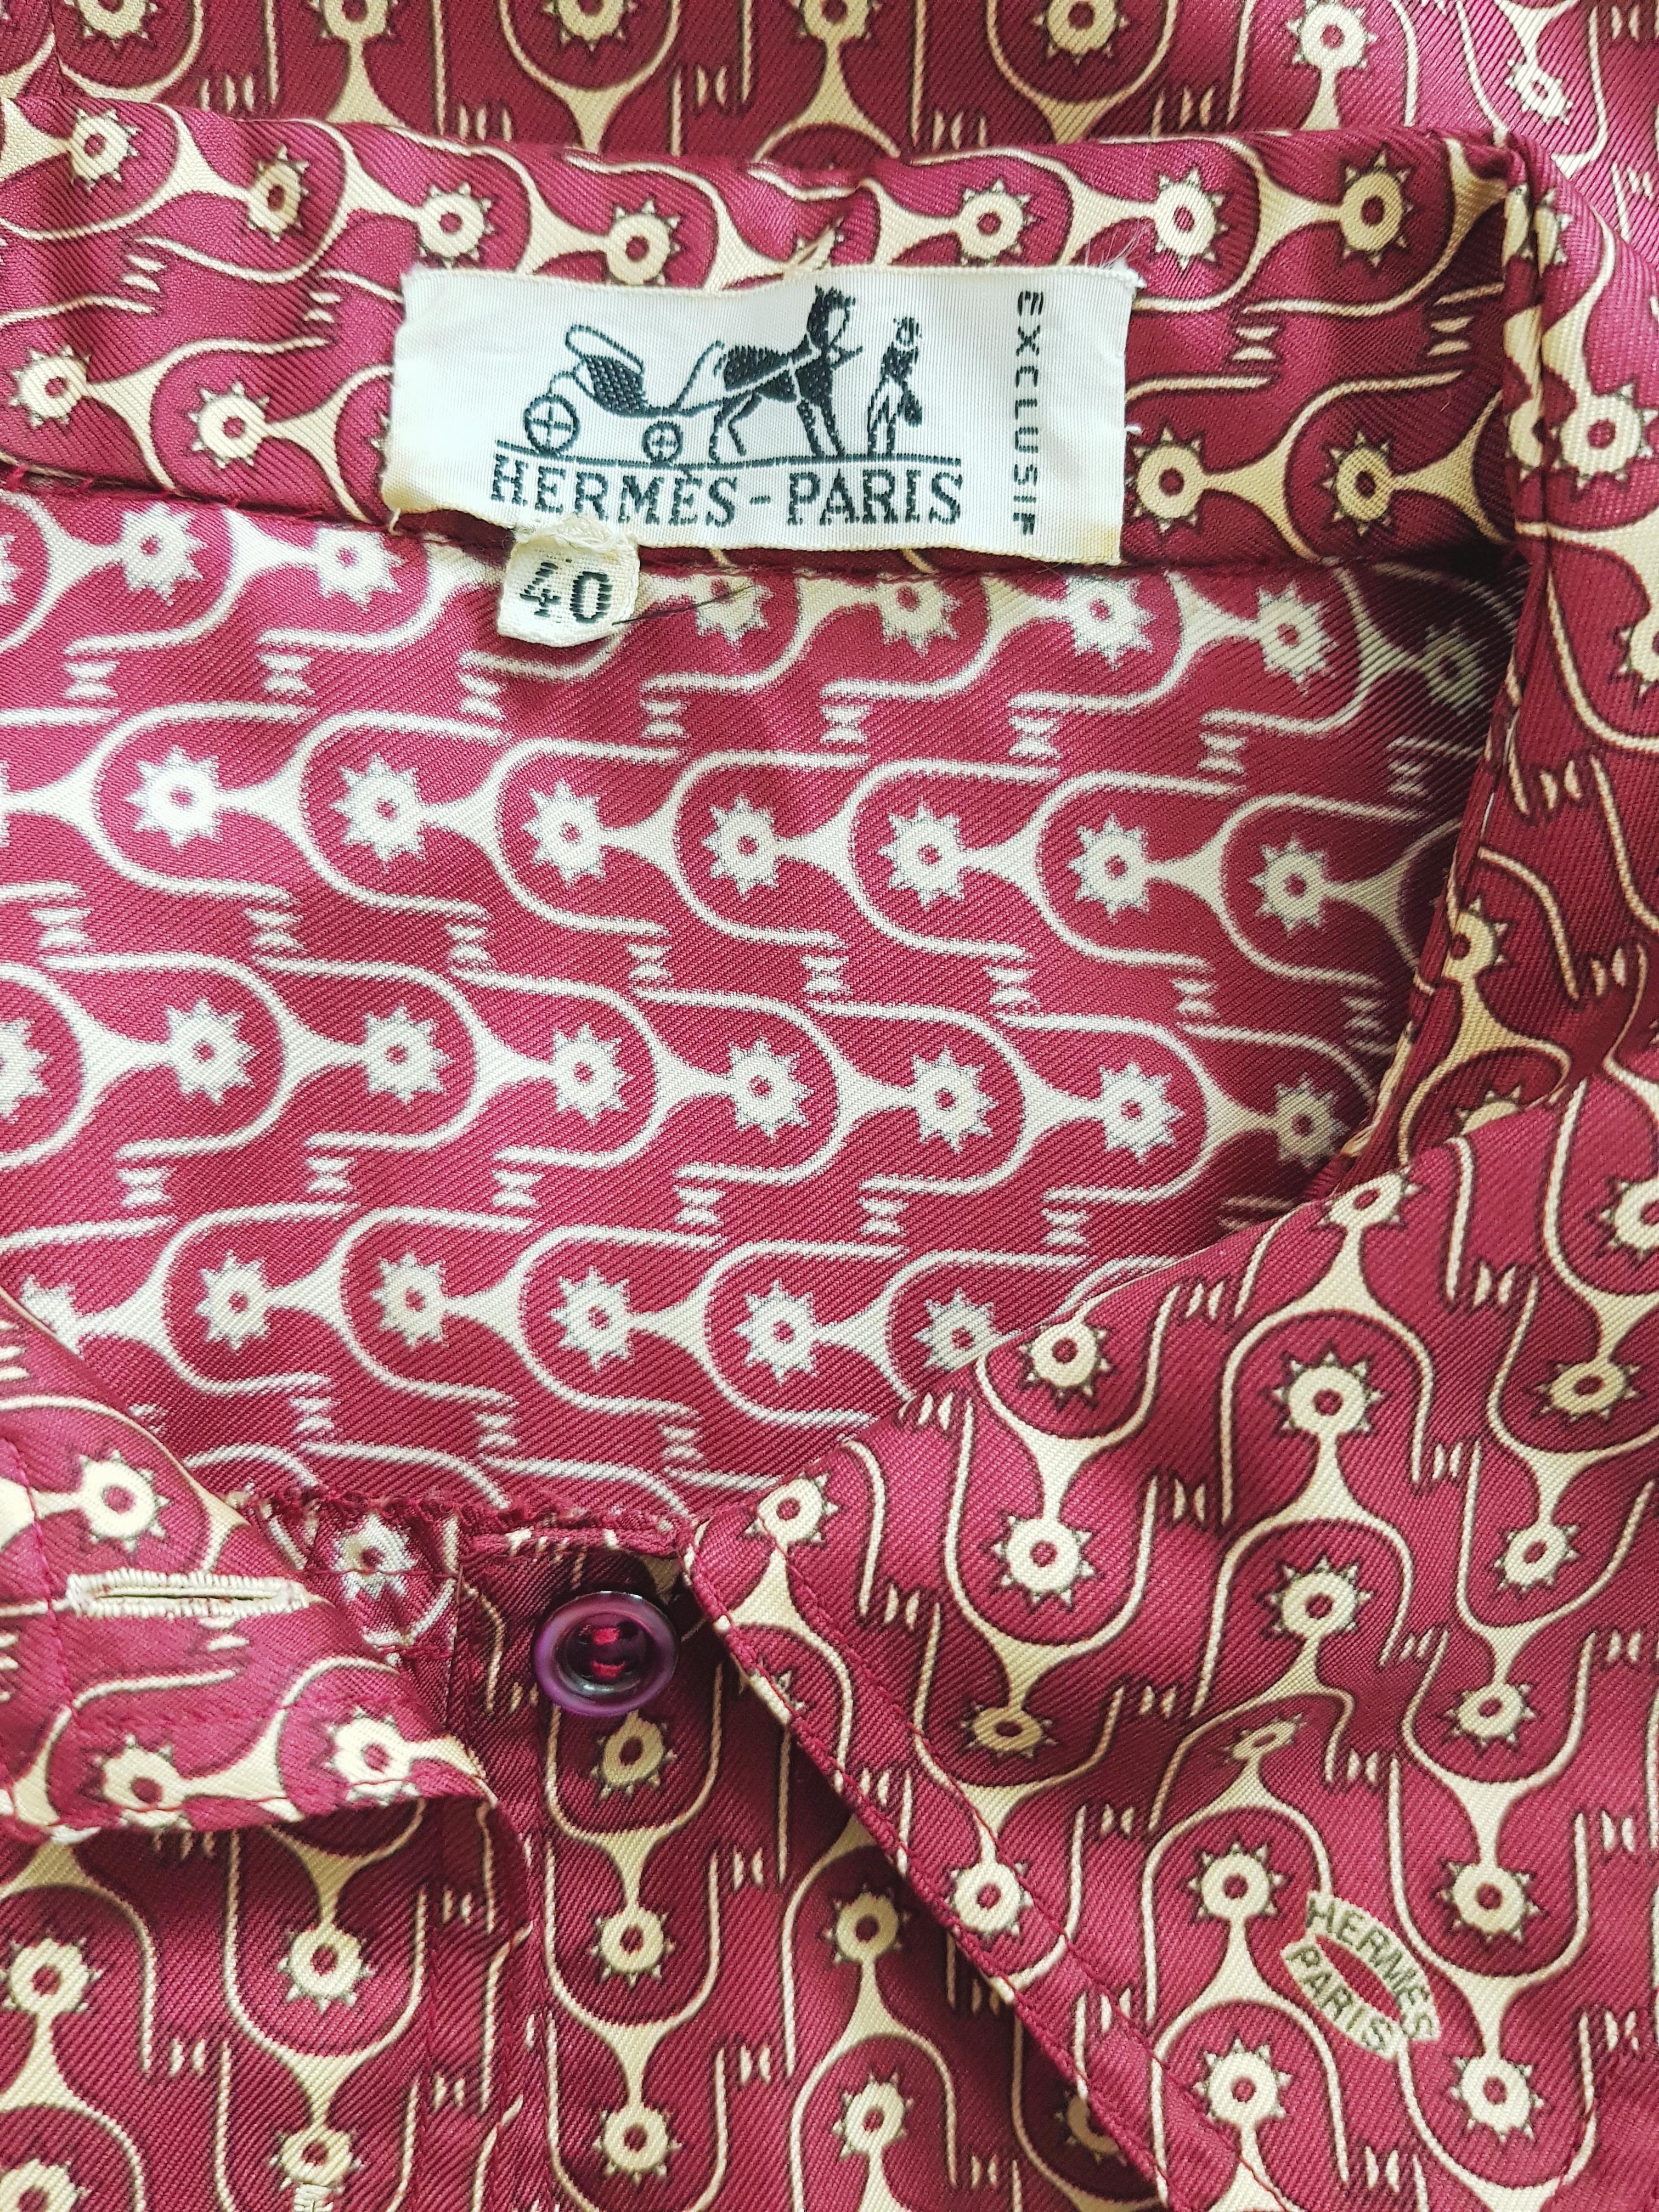 Brown HERMÈS Equestrian spur print silk dress, c. 1960s limited edition